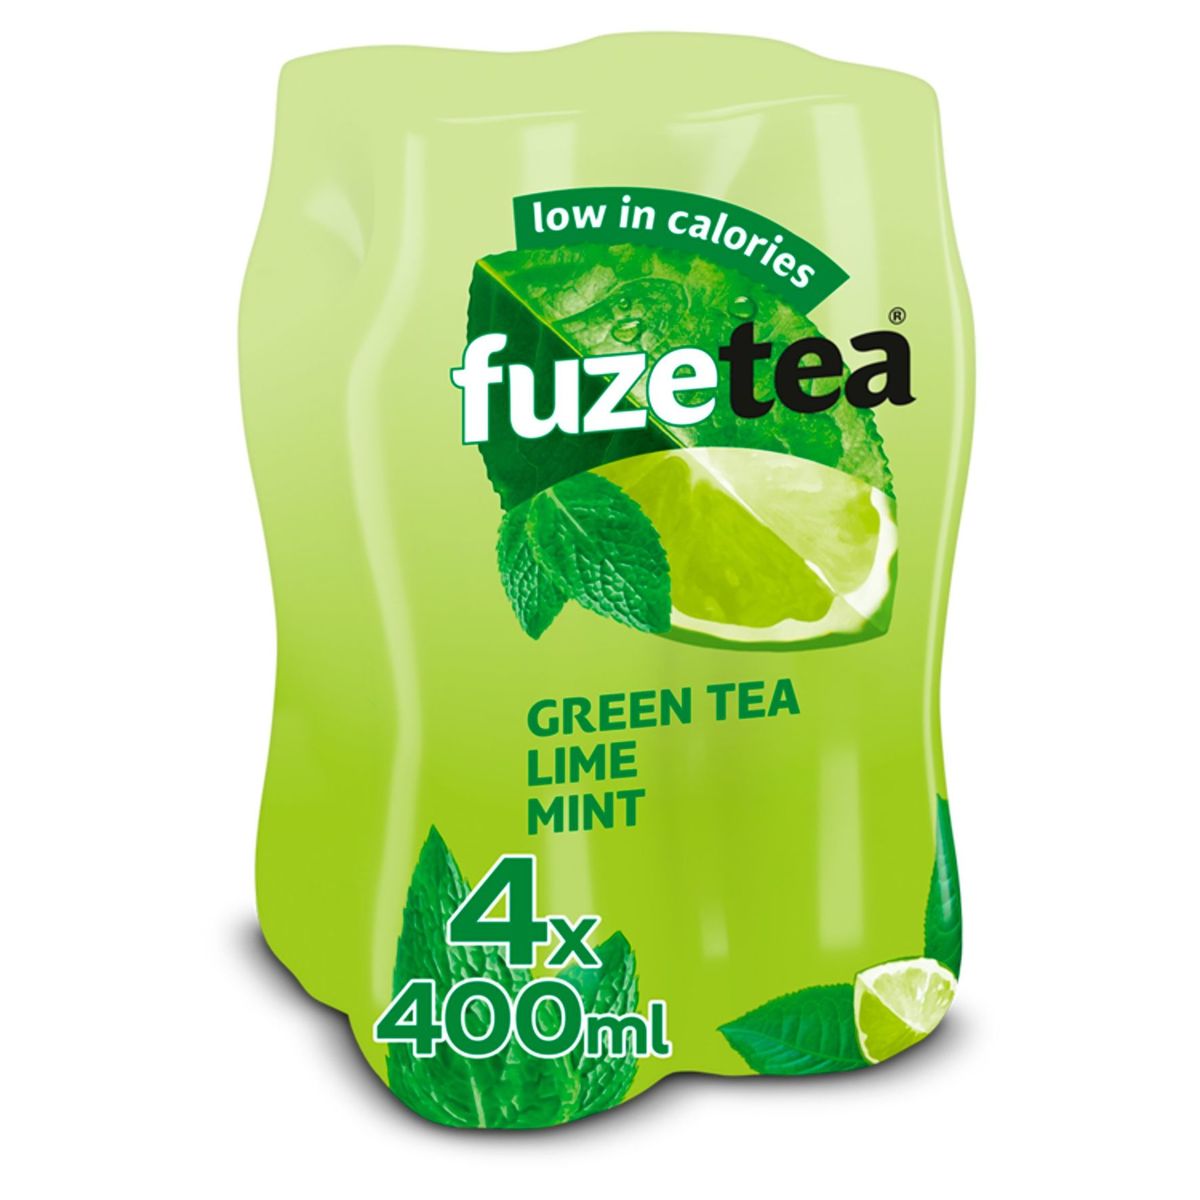 Fuze Tea Green Tea Lime Mint Iced Tea 4 x 400 ml